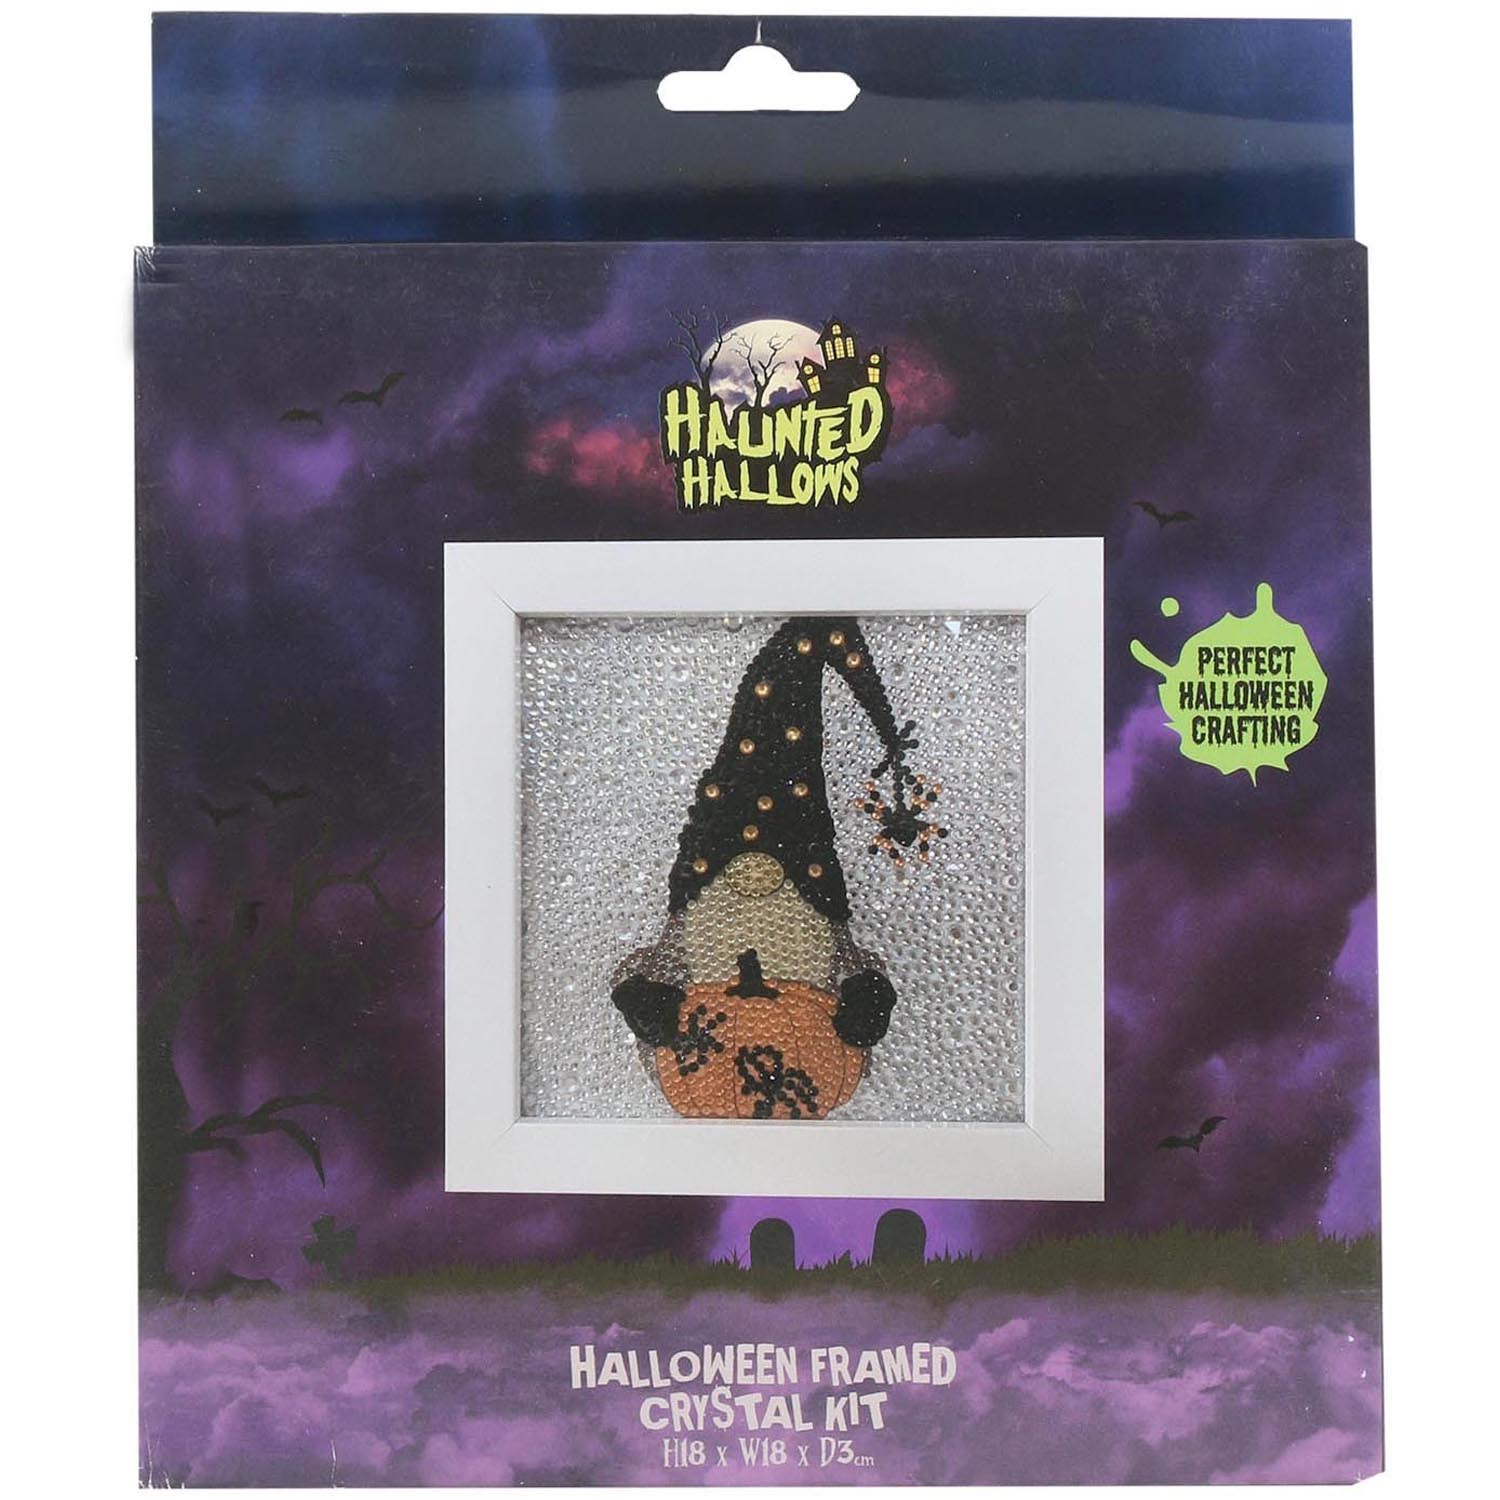 Haunted Hallows Halloween Framed Crystal Art Kit Image 1